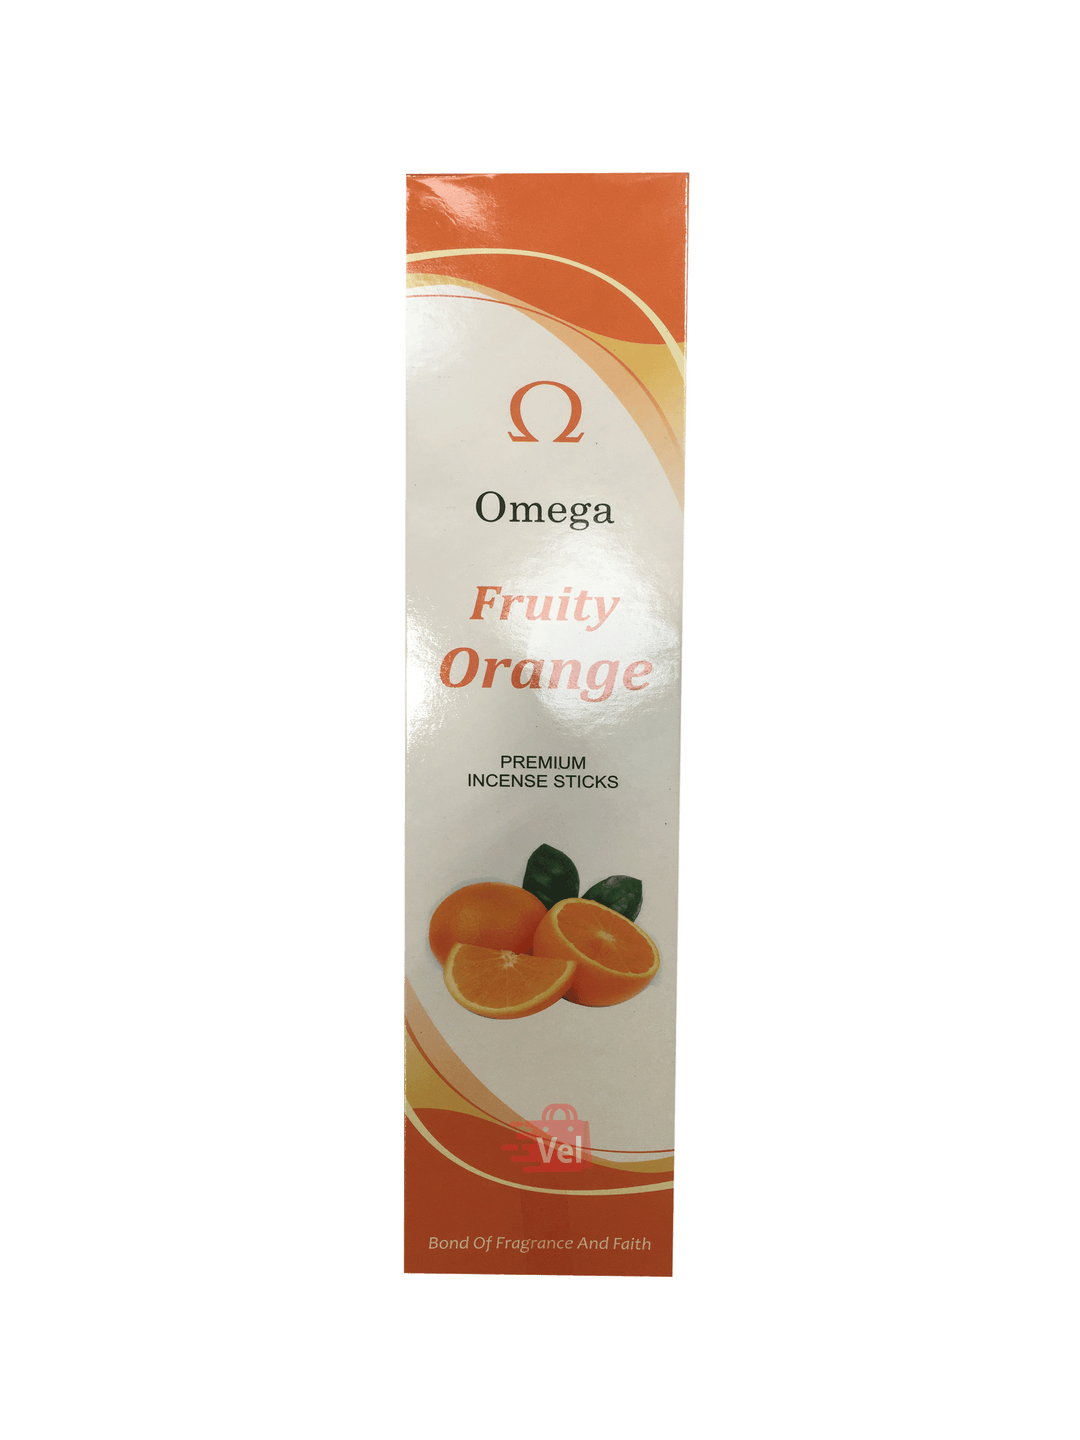 Omega Fruity Orange Incense Sticks